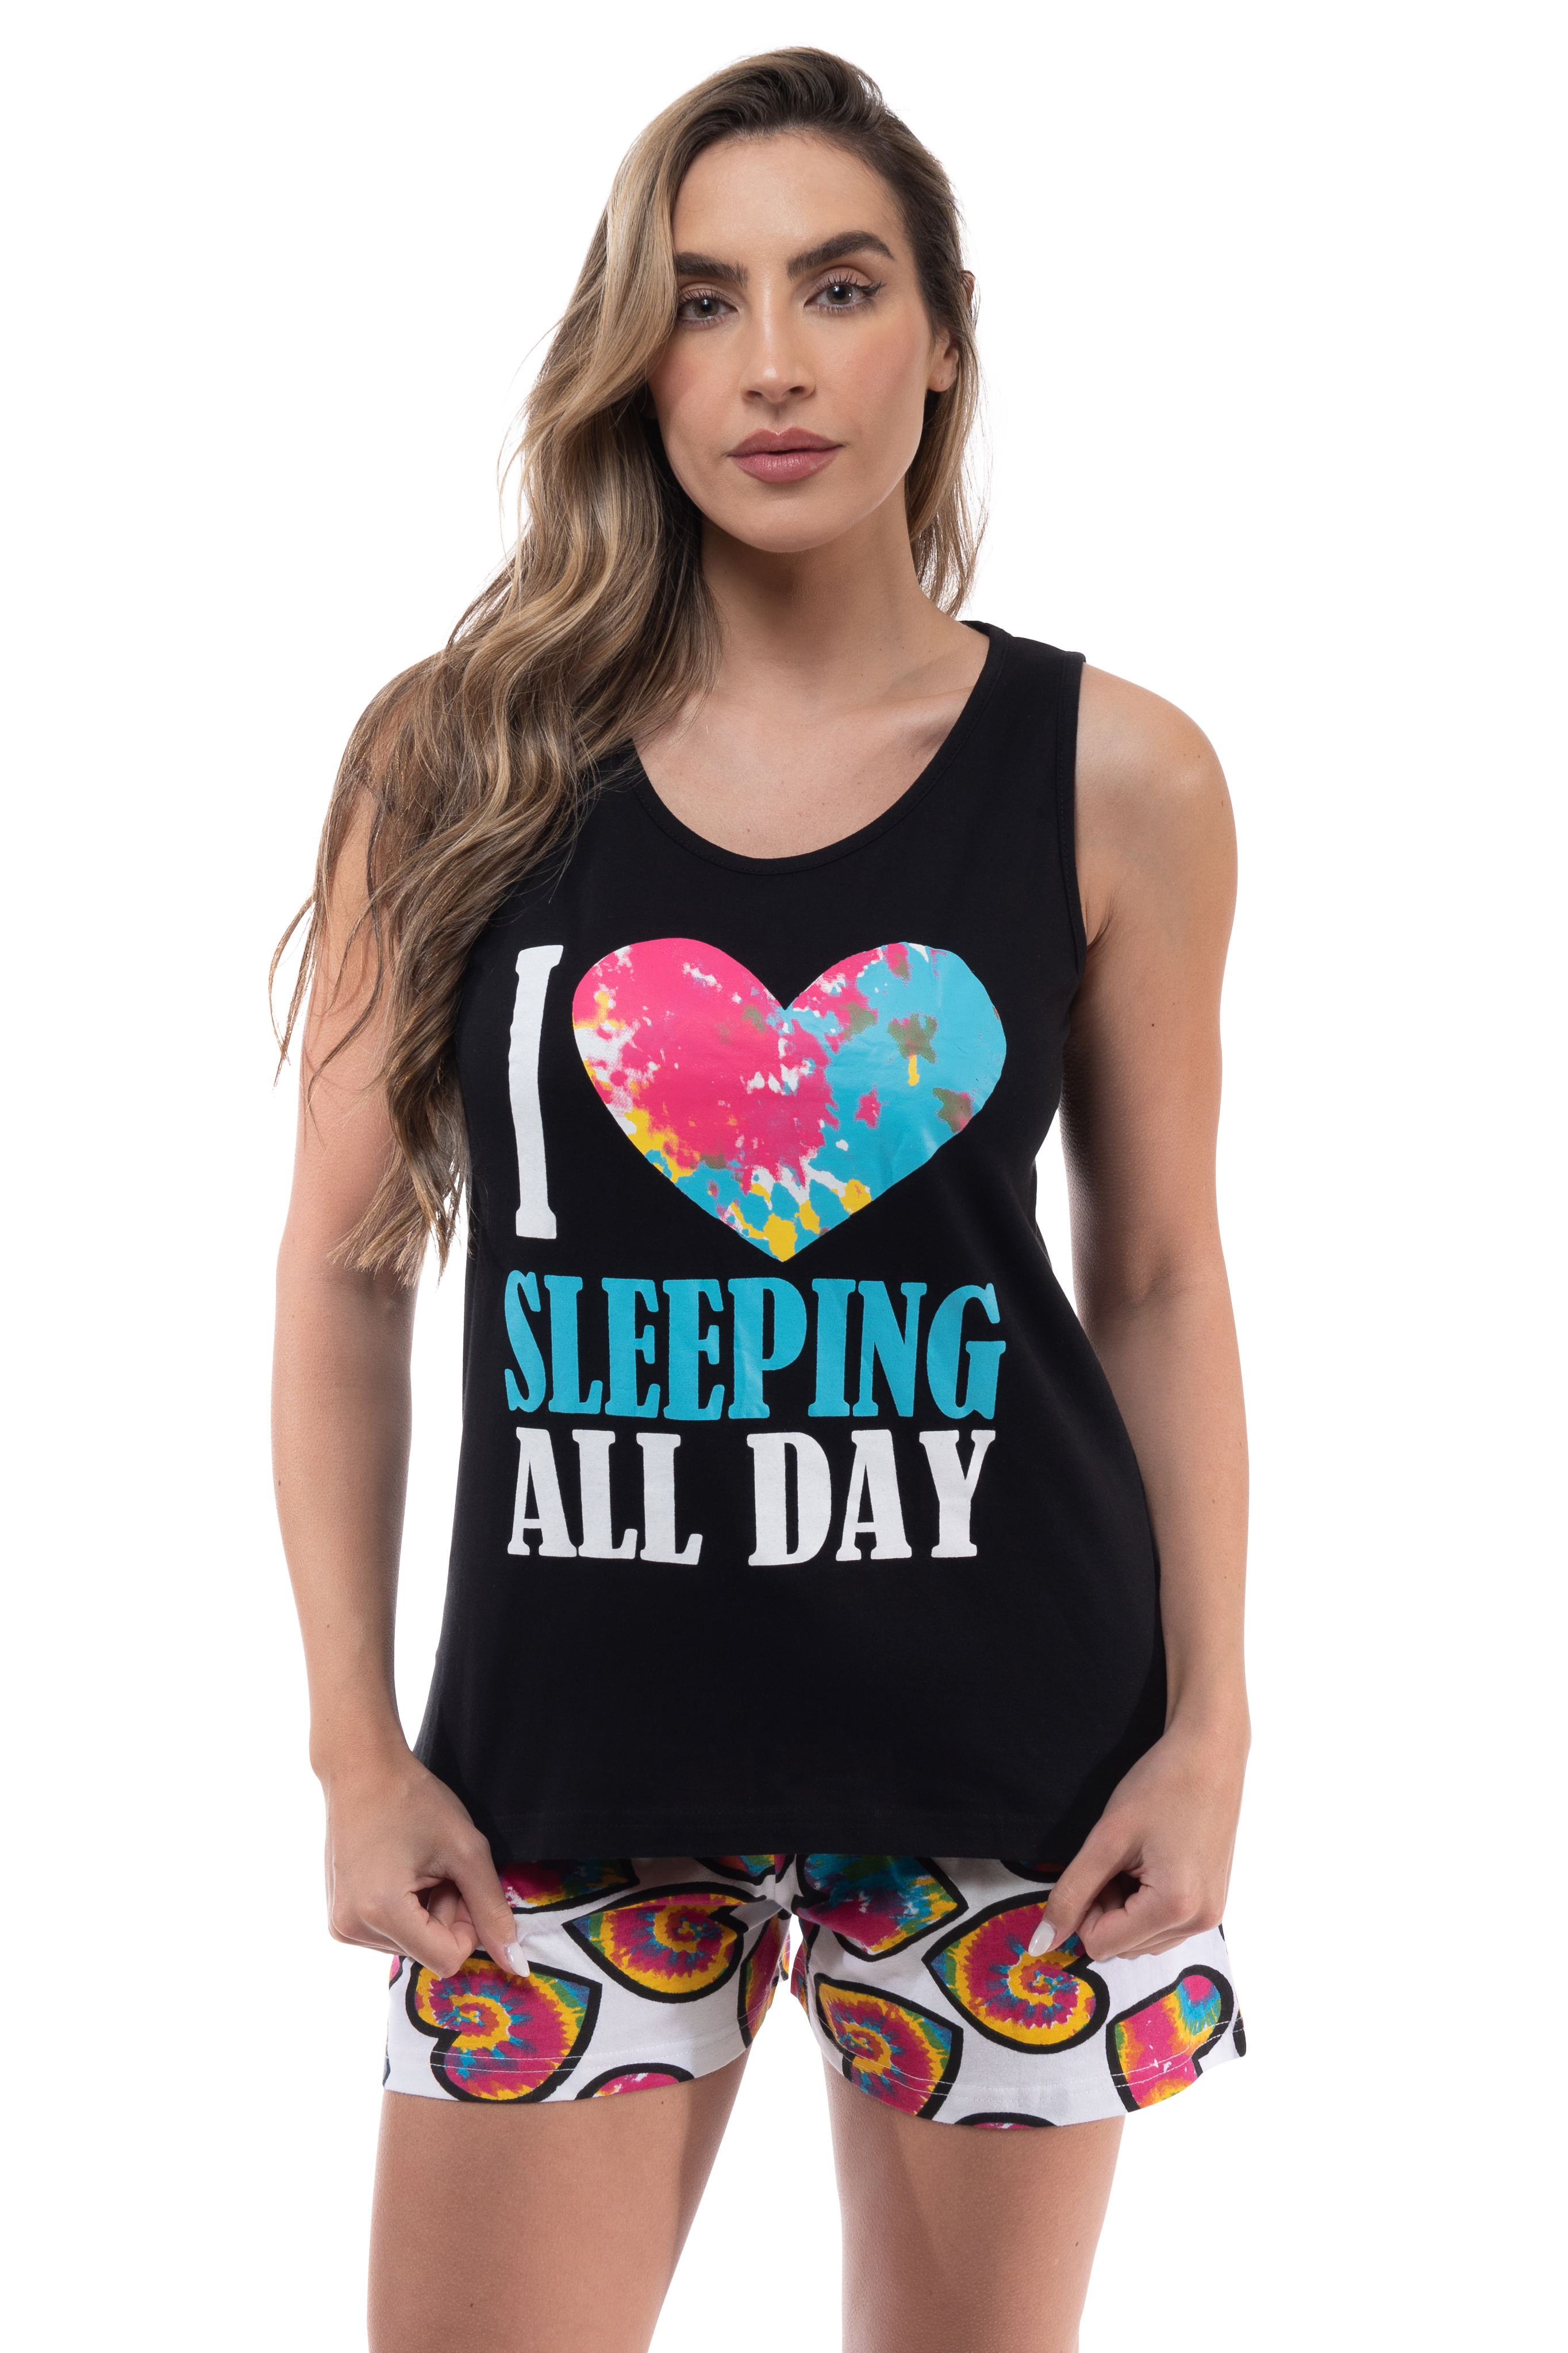 Just Love 100% Cotton Women Sleepwear Pajama Sets (Black - I Love Sleeping All Day, X-large) - image 1 of 3